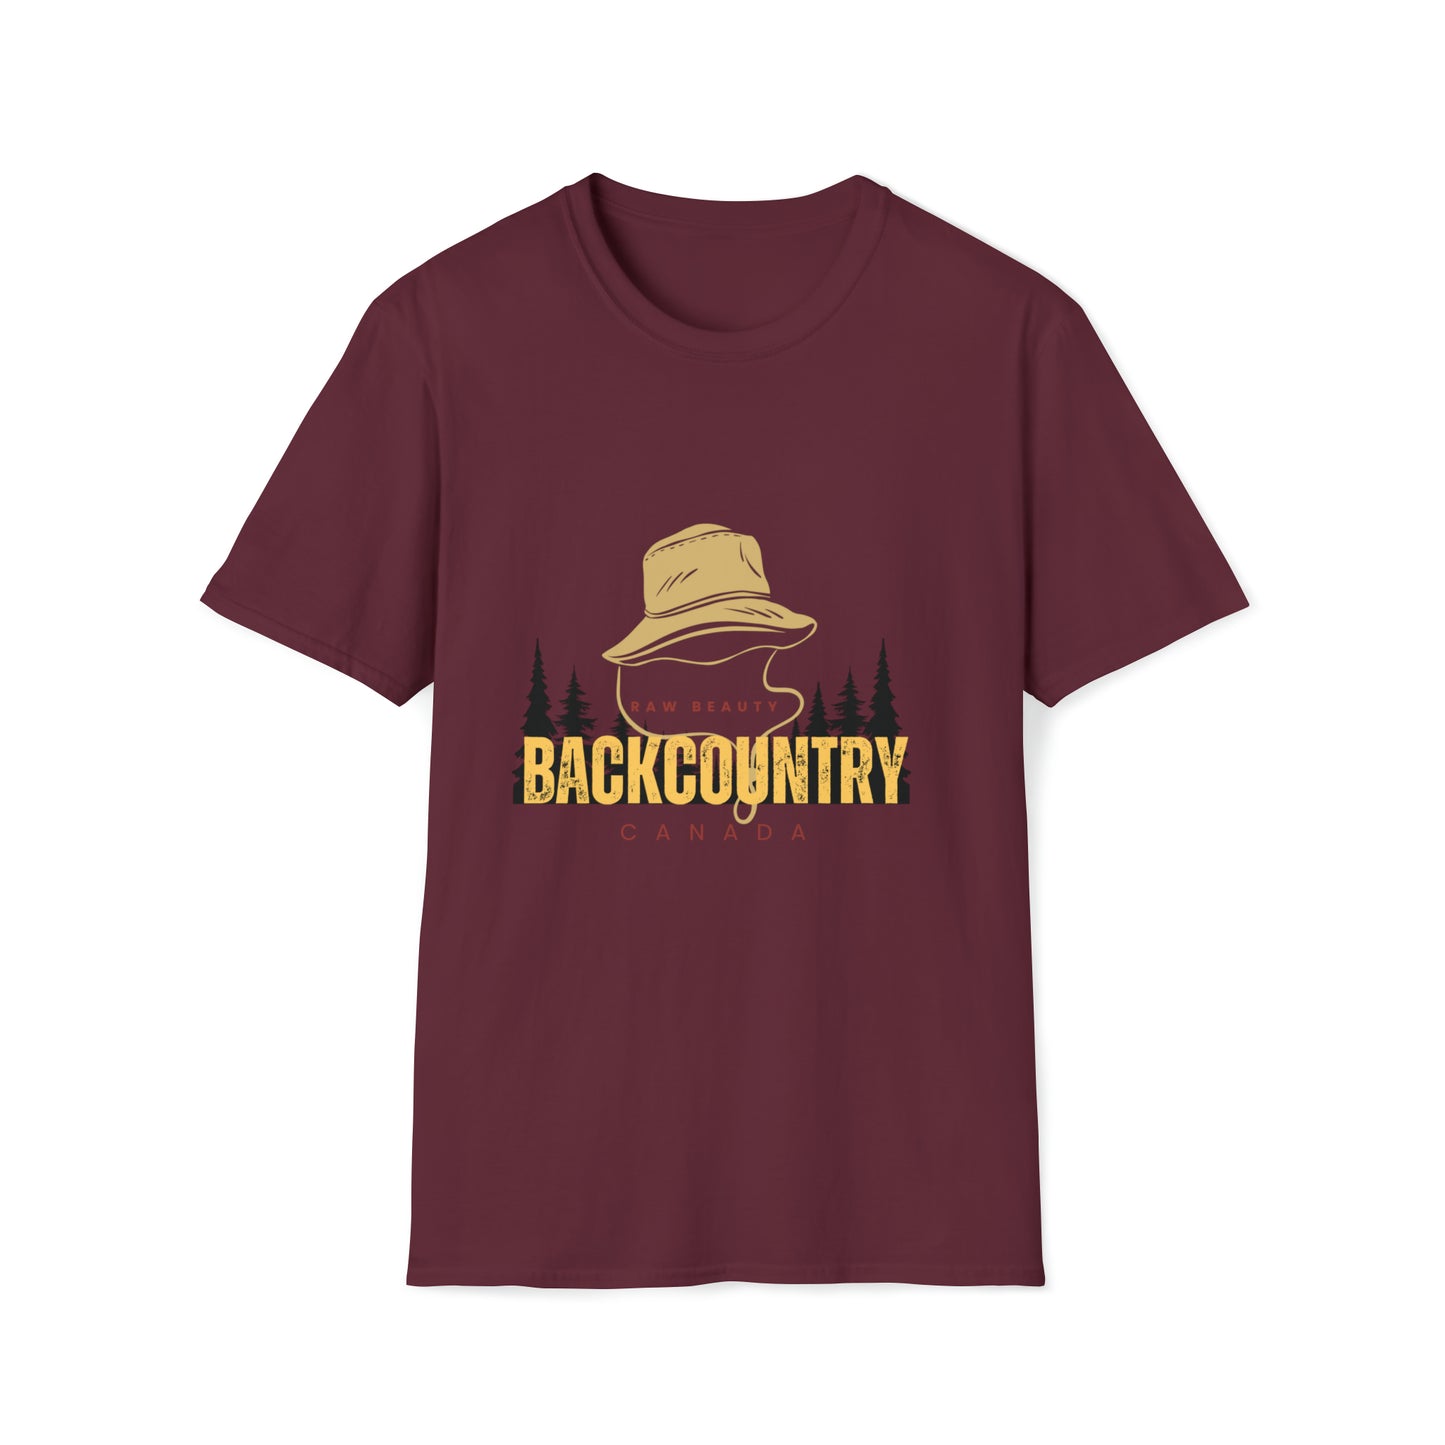 Backcountry - Raw Beauty